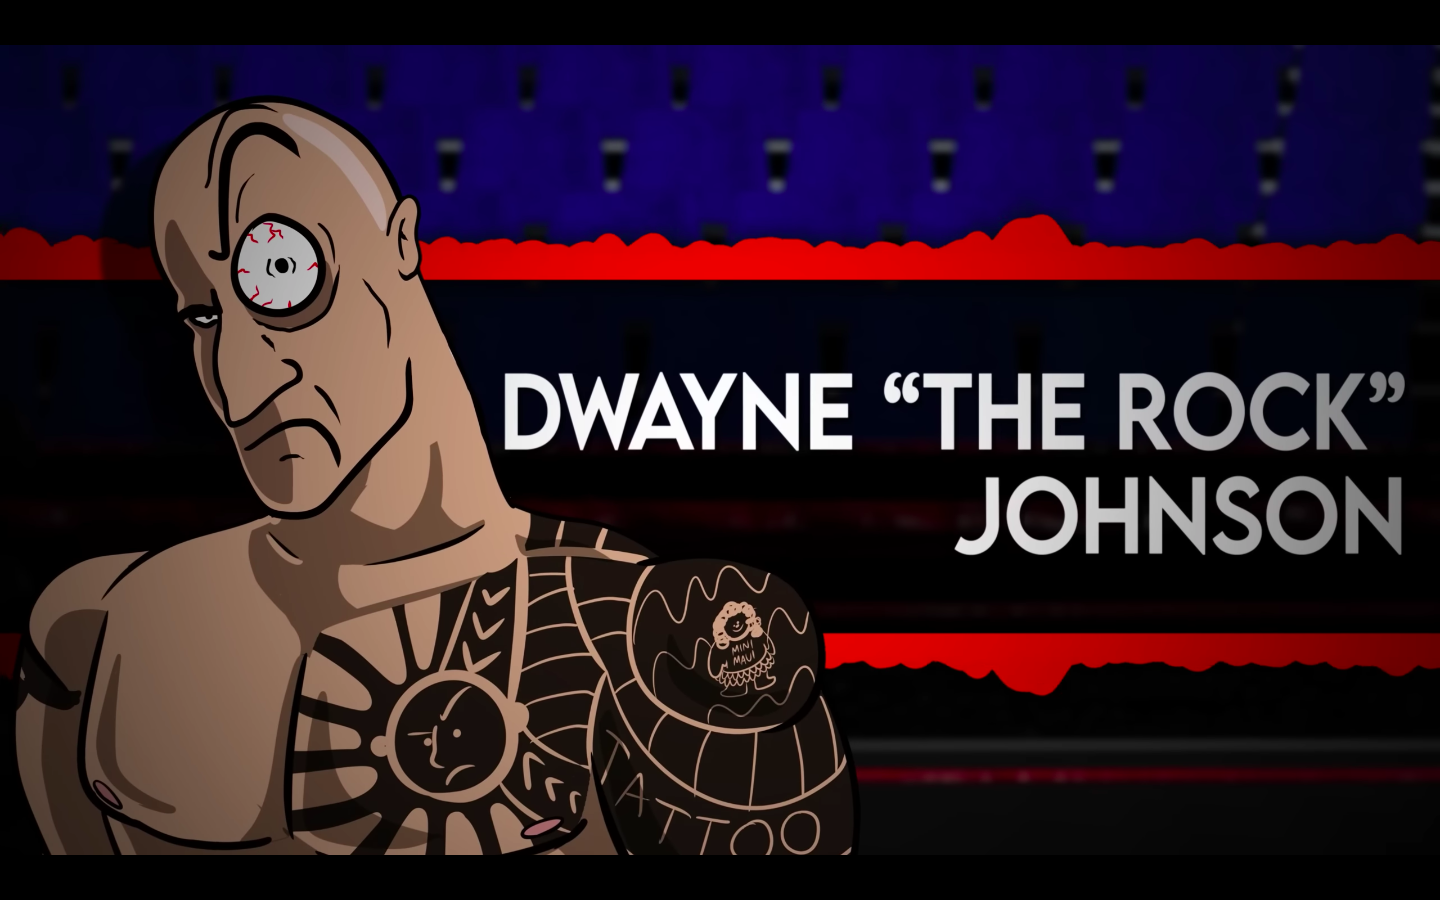 Dwayne The Rock Johnson eyebrow raise meme | Postcard